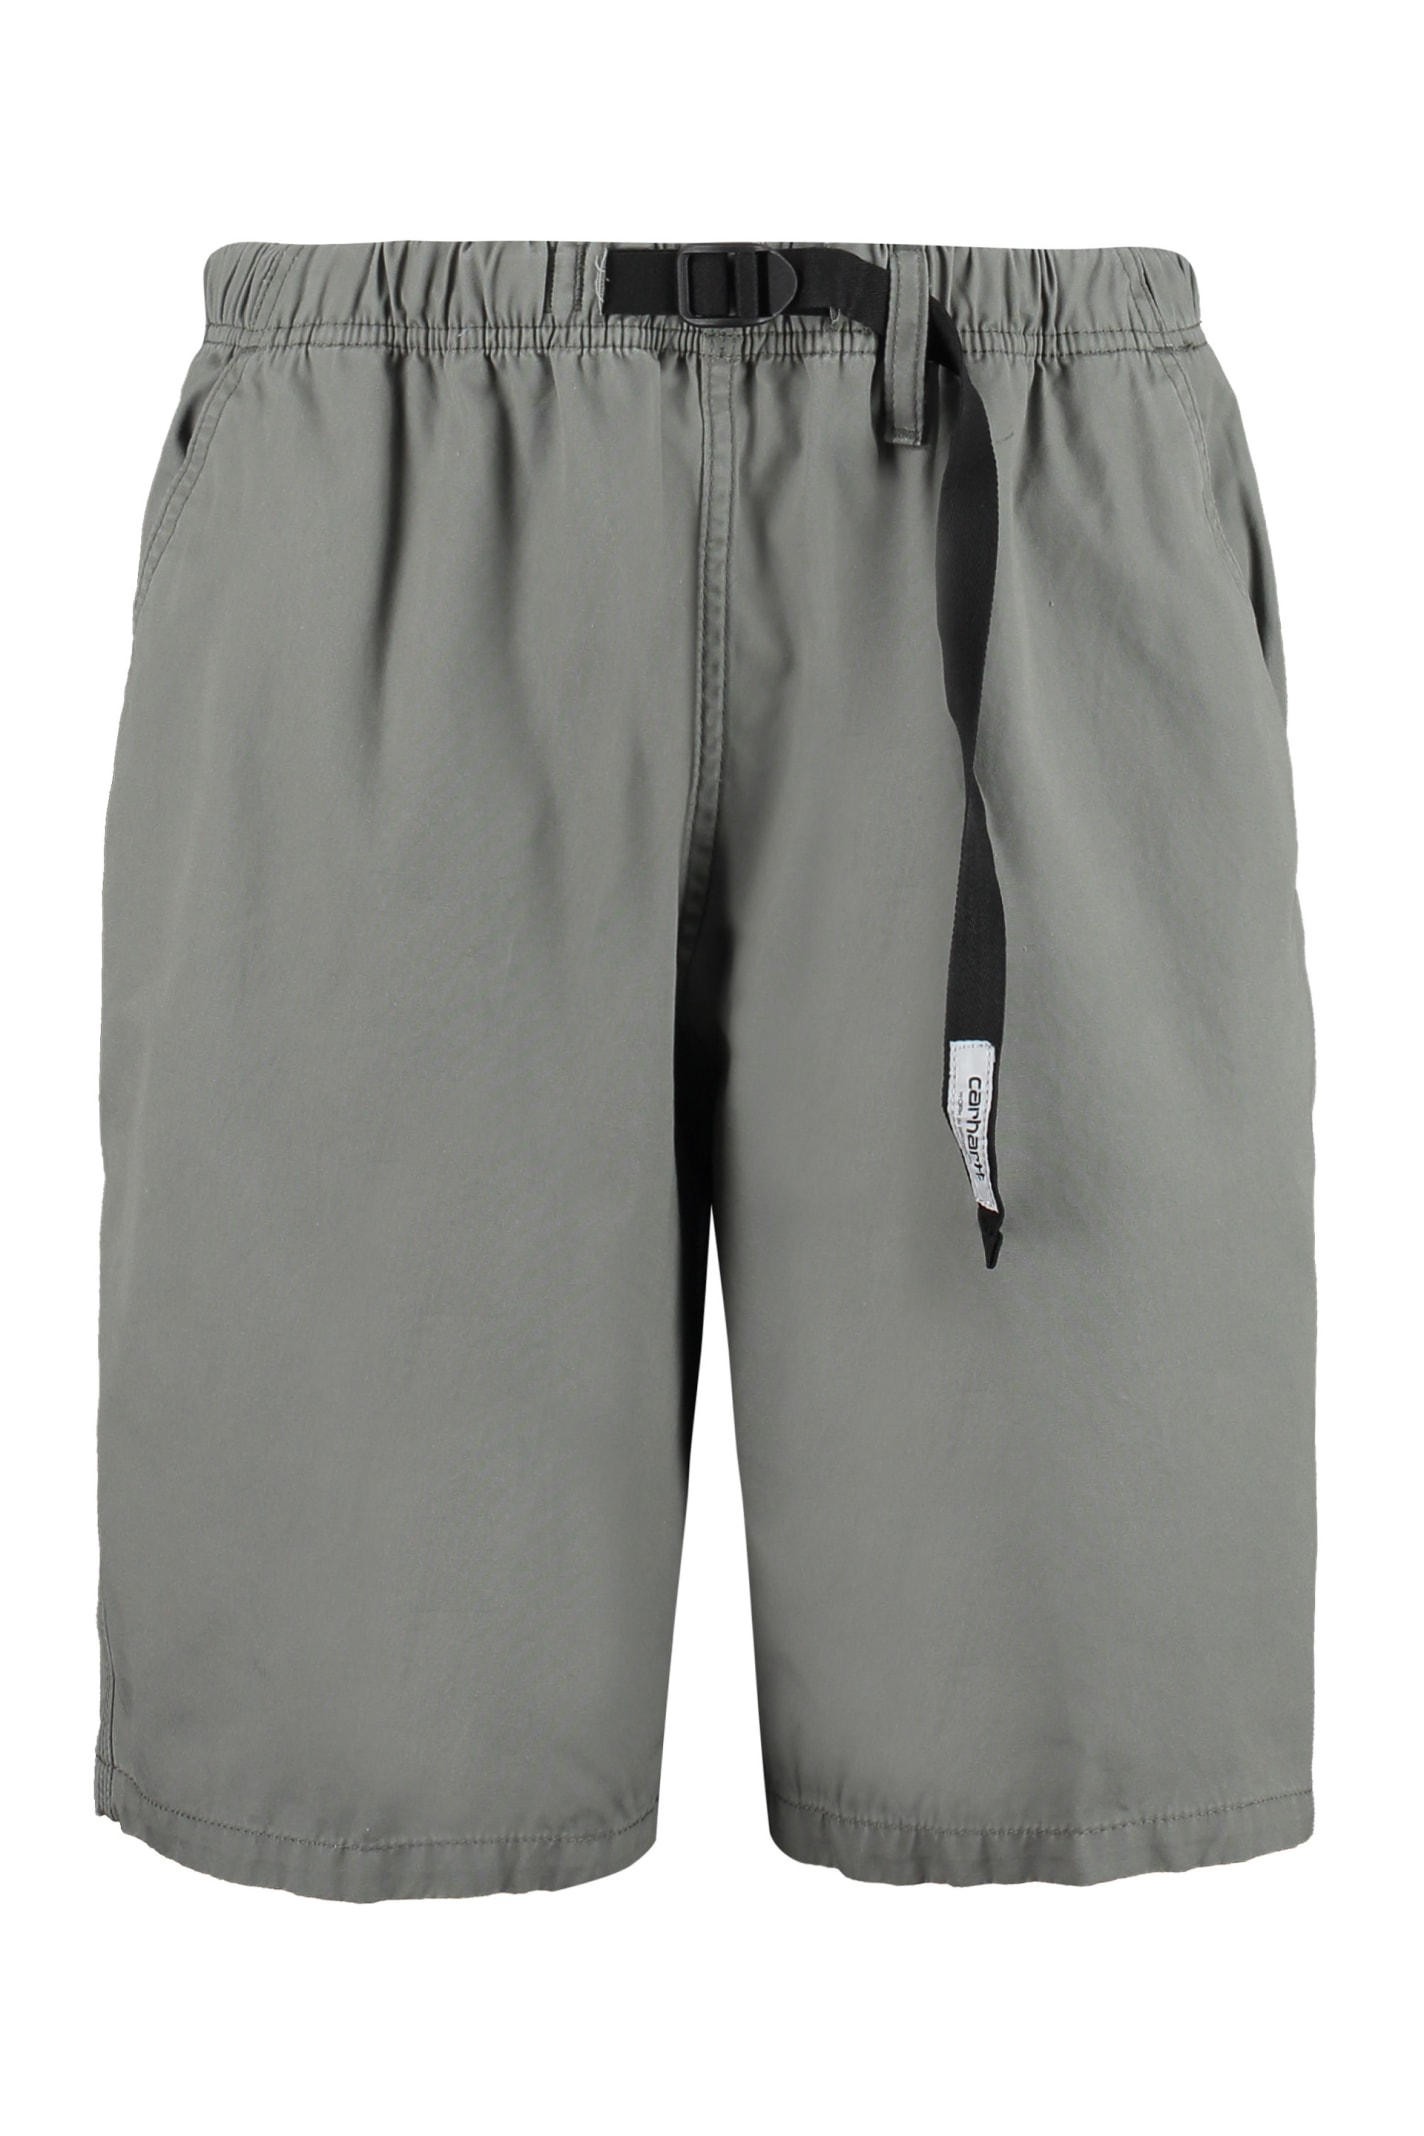 Carhartt Clover Cotton Bermuda Shorts